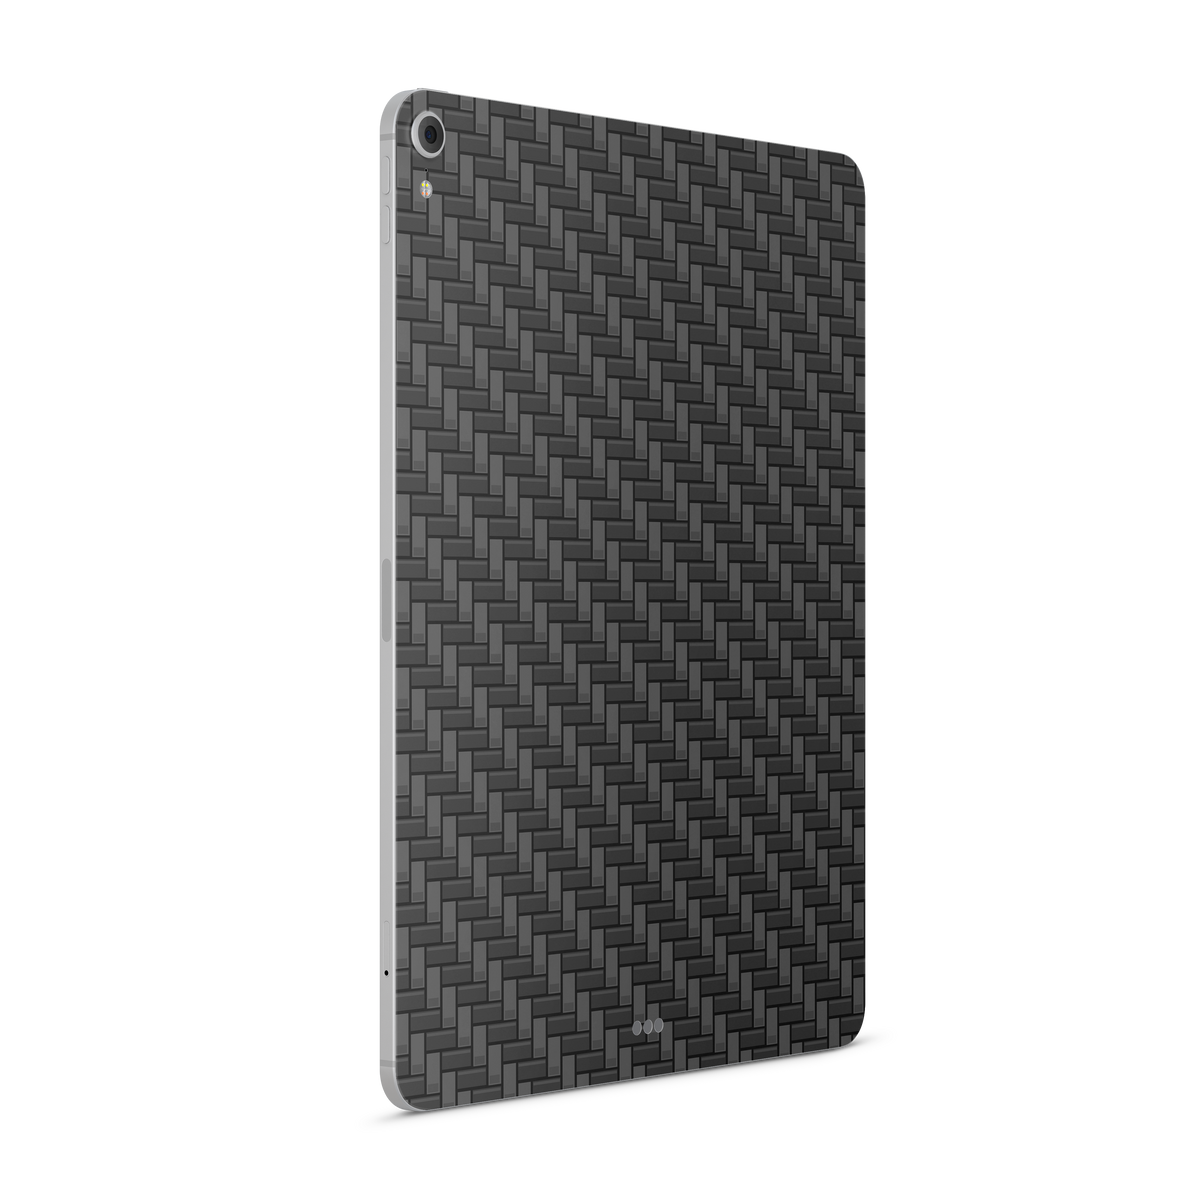 Apple iPad Pro 12.9 3rd Gen 2018 Carbon Fiber Skin